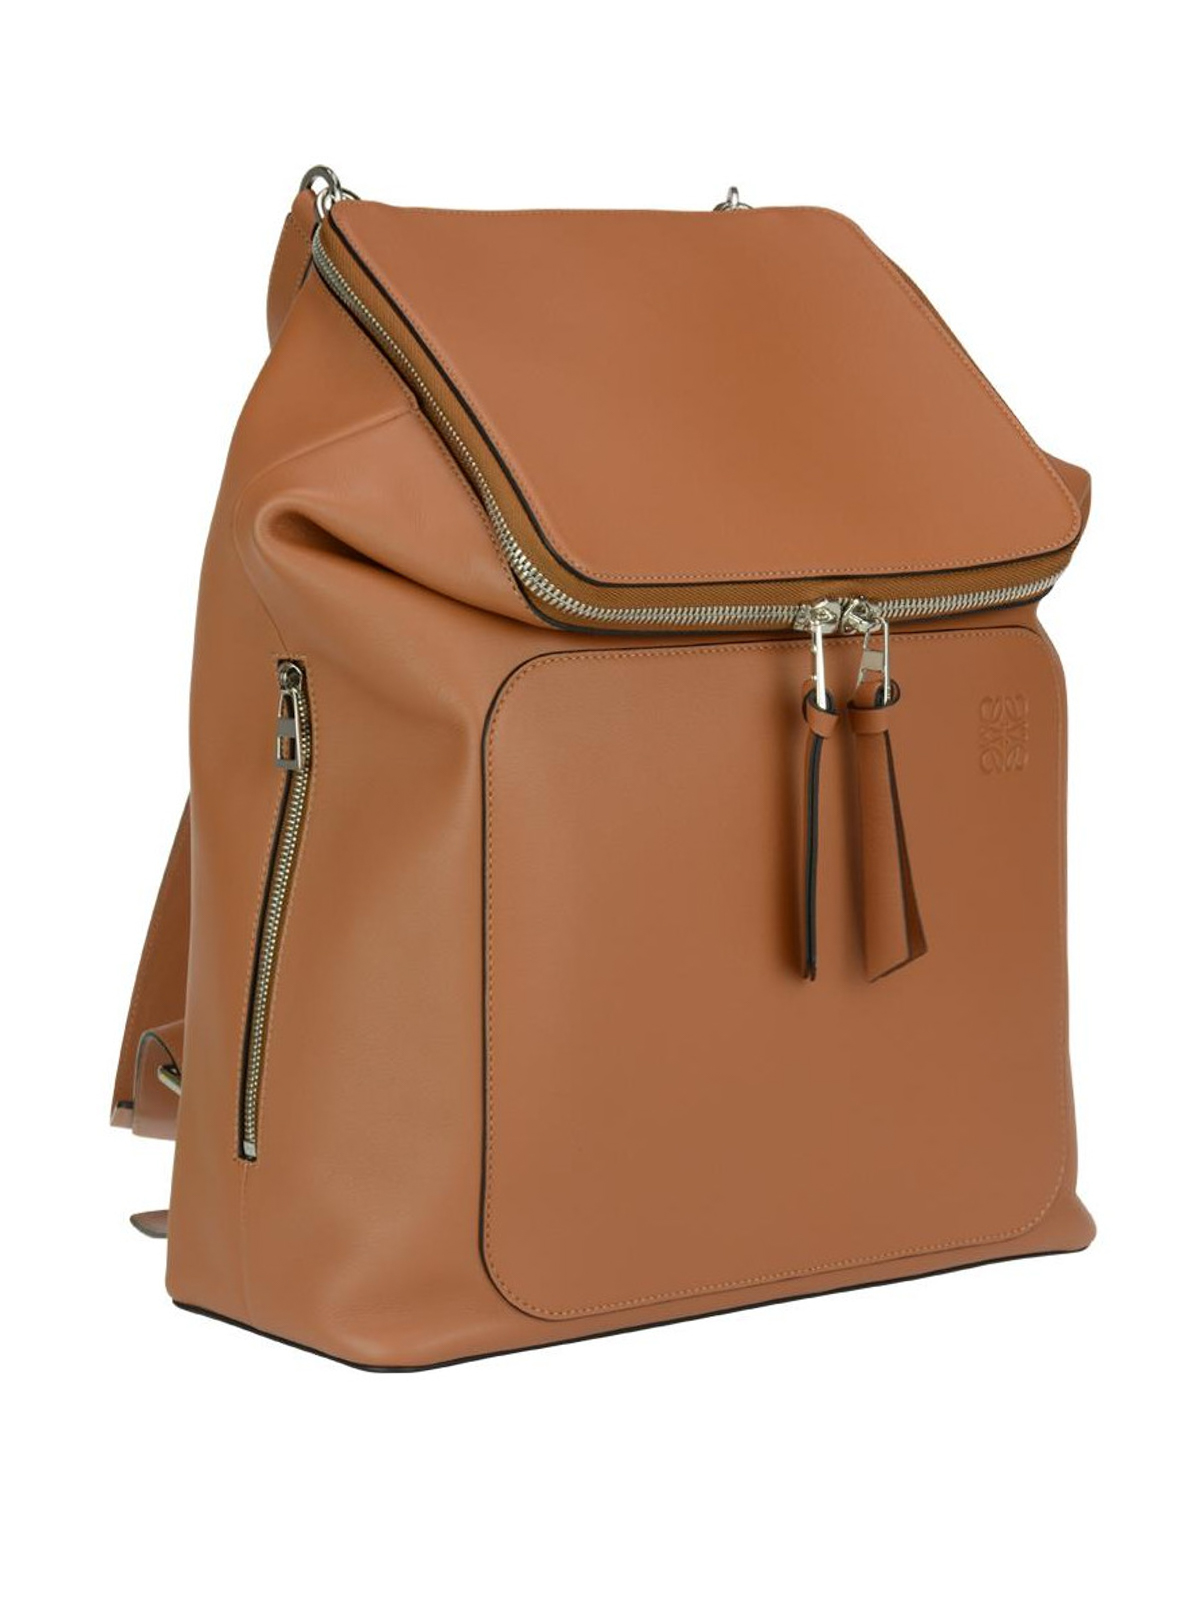 Loewe Goya Small Leather Backpack in Brown